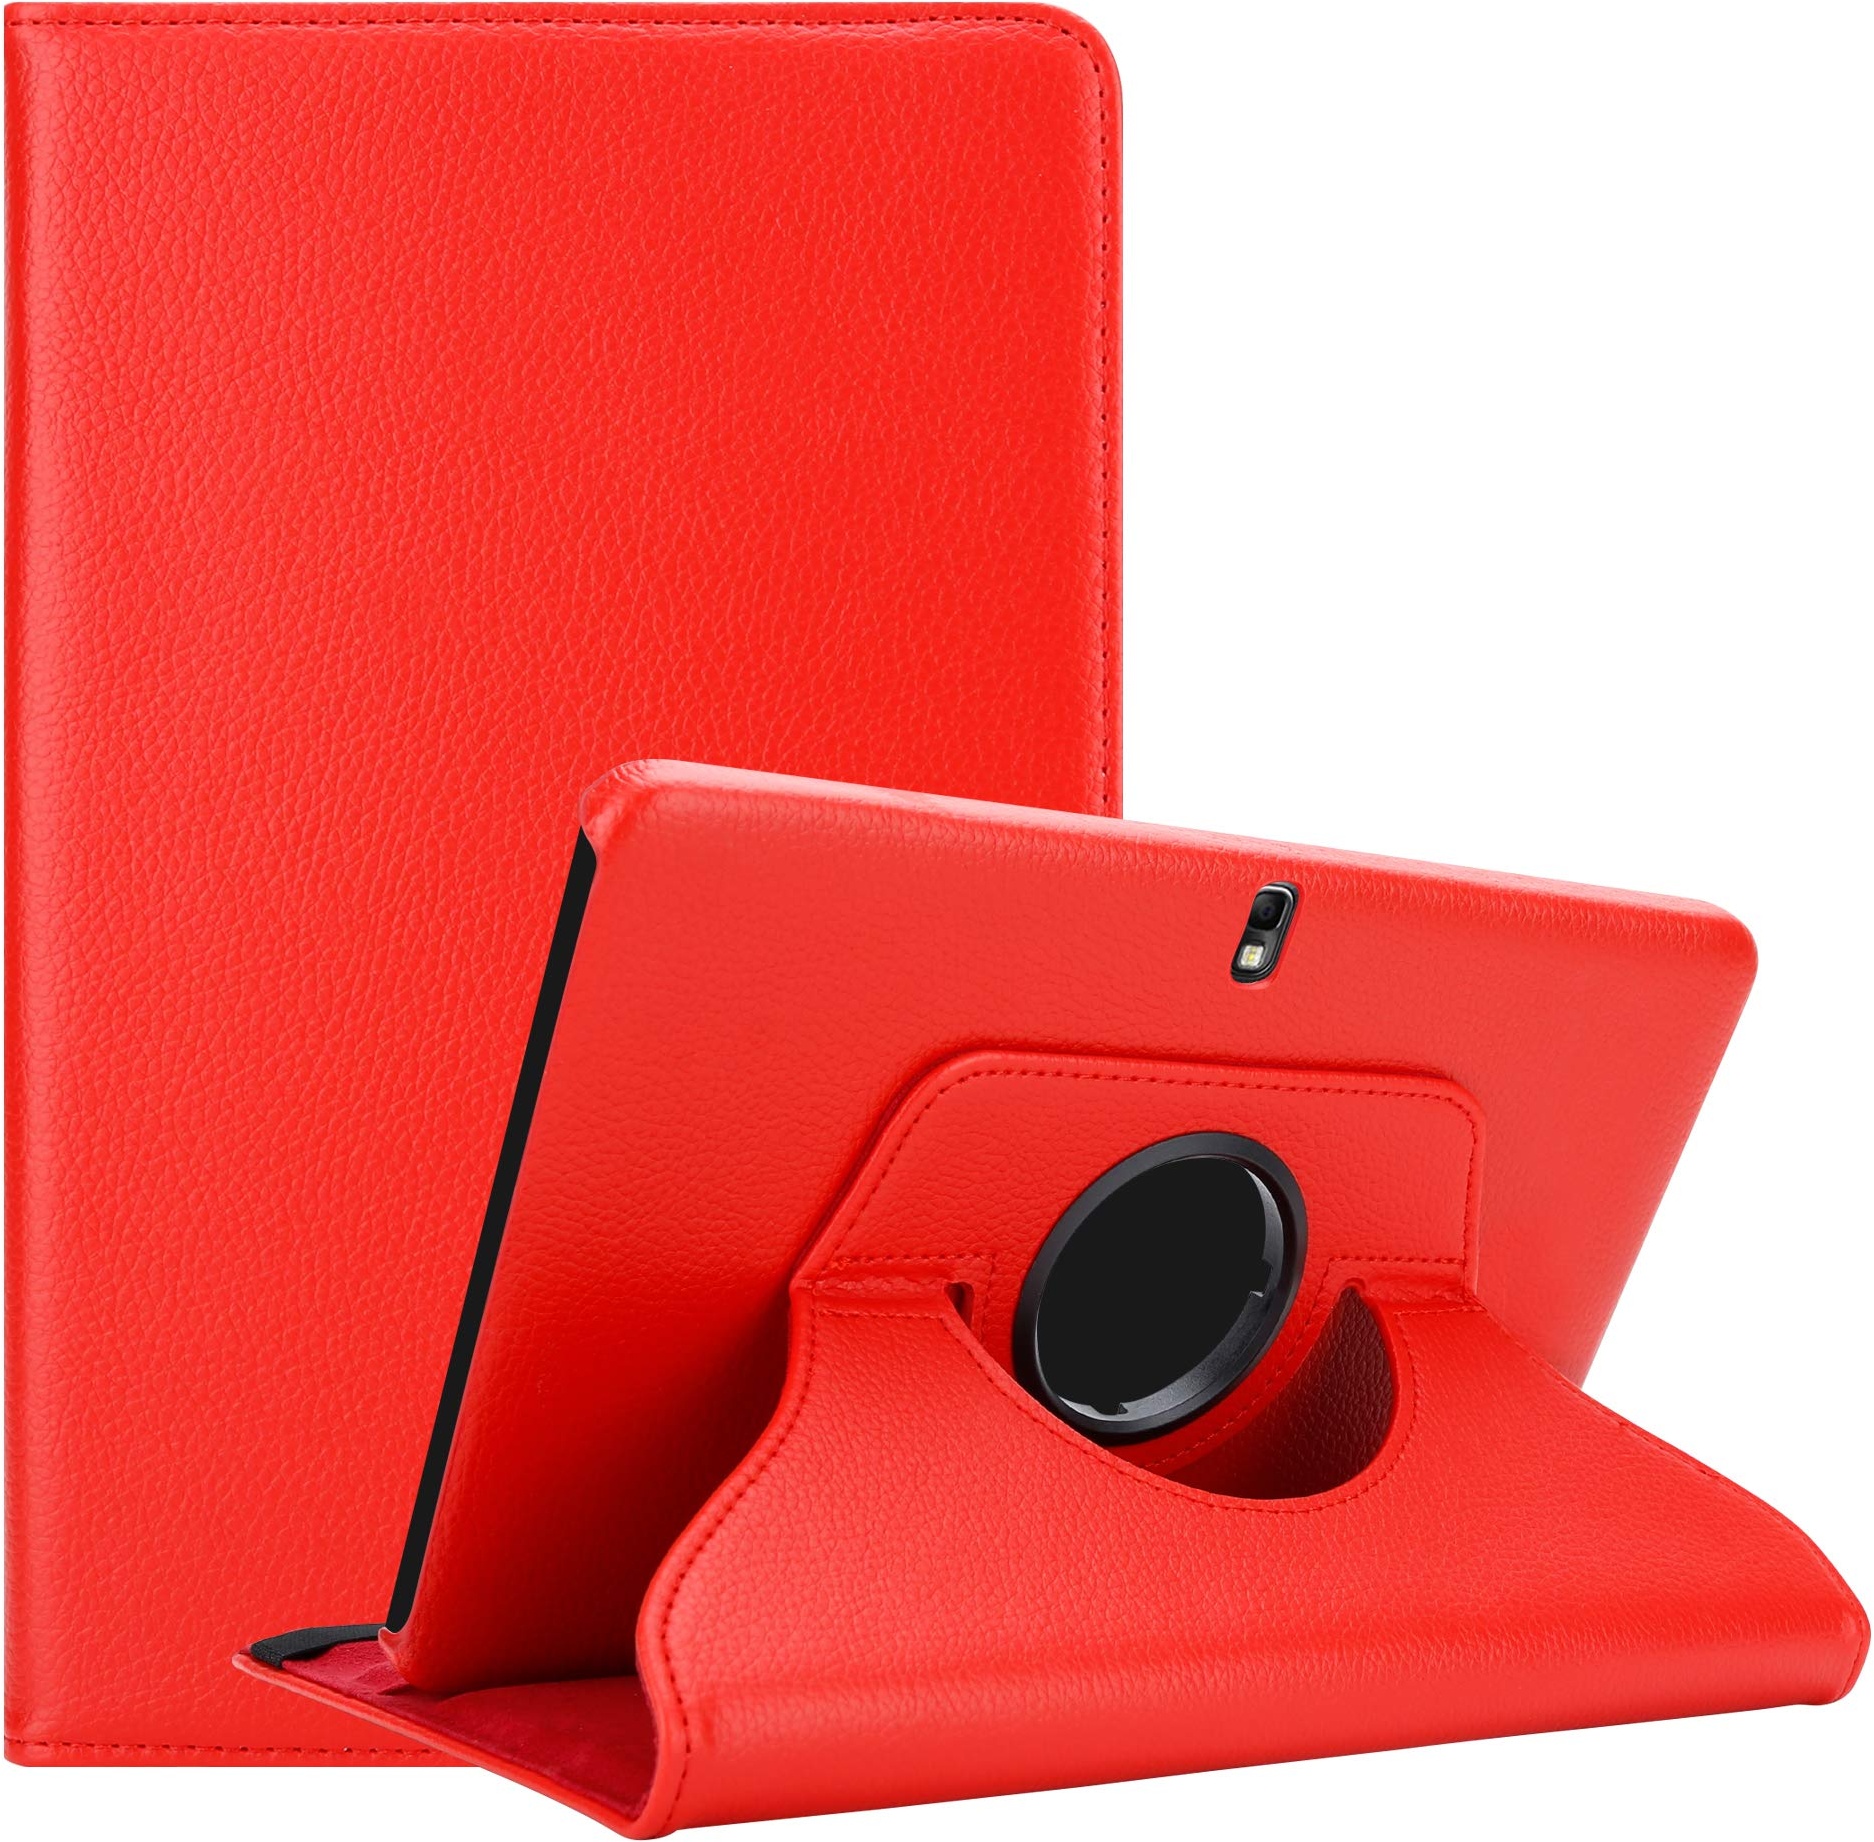 Cadorabo Hülle kompatibel mit Samsung Galaxy Note 10.1 2014 / Tab PRO 10.1 Tablethülle ohne Auto Wake Up aus Kunst Leder Klappbare Cover Hülle für Galaxy Note 10.1 2014 / Tab PRO 10.1 Tasche in Rot